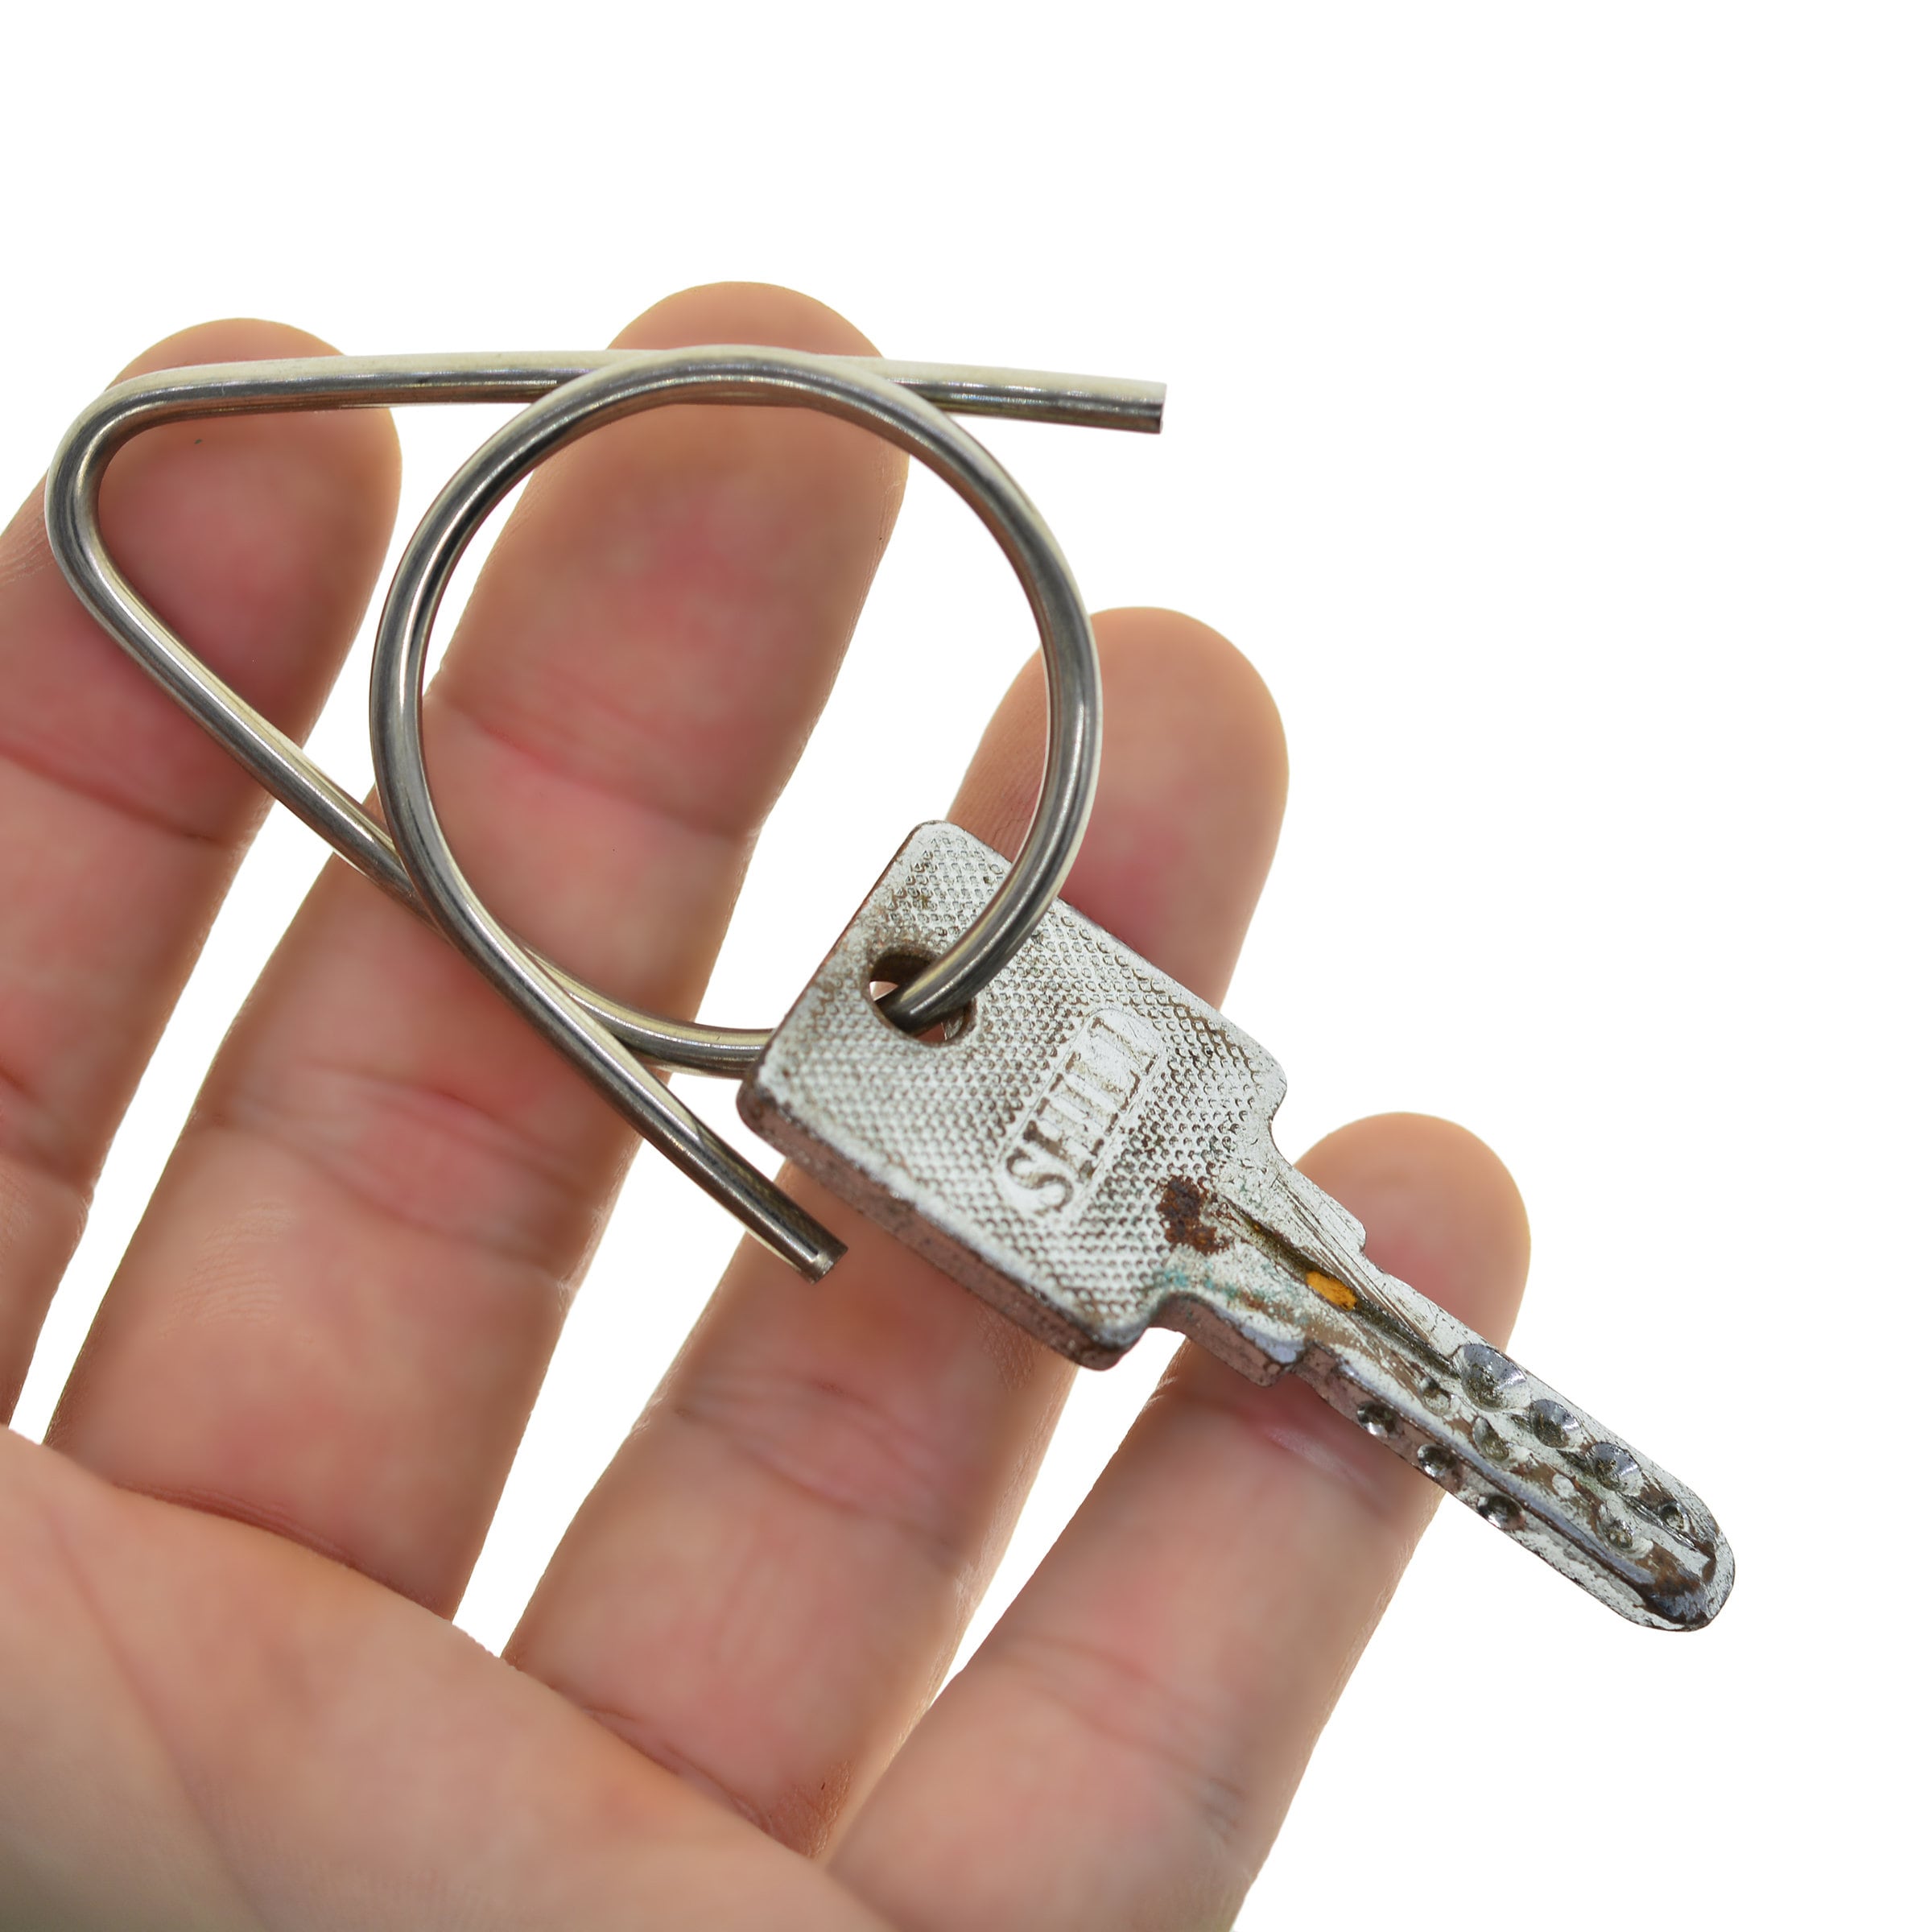 Keychain, Personalized Keychain Custom Keychain Drive Safe Engrave